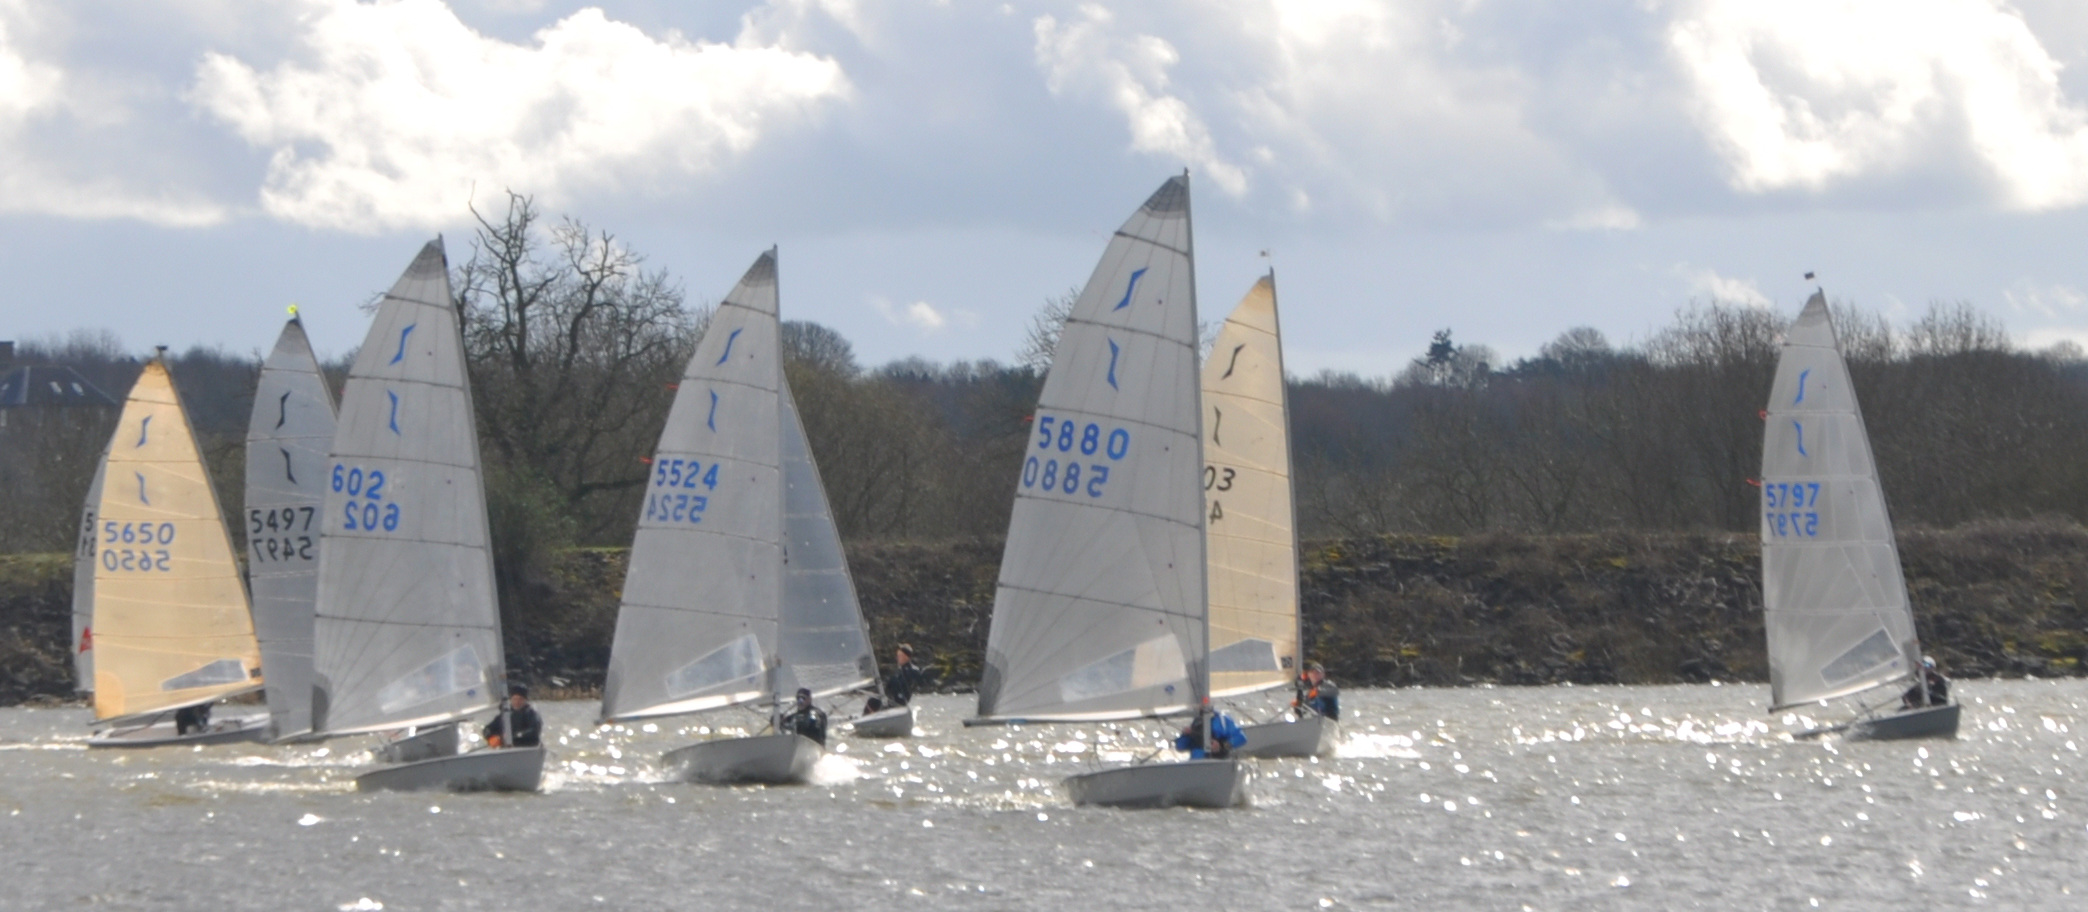 Solo dinghys racing at banbury sailing club